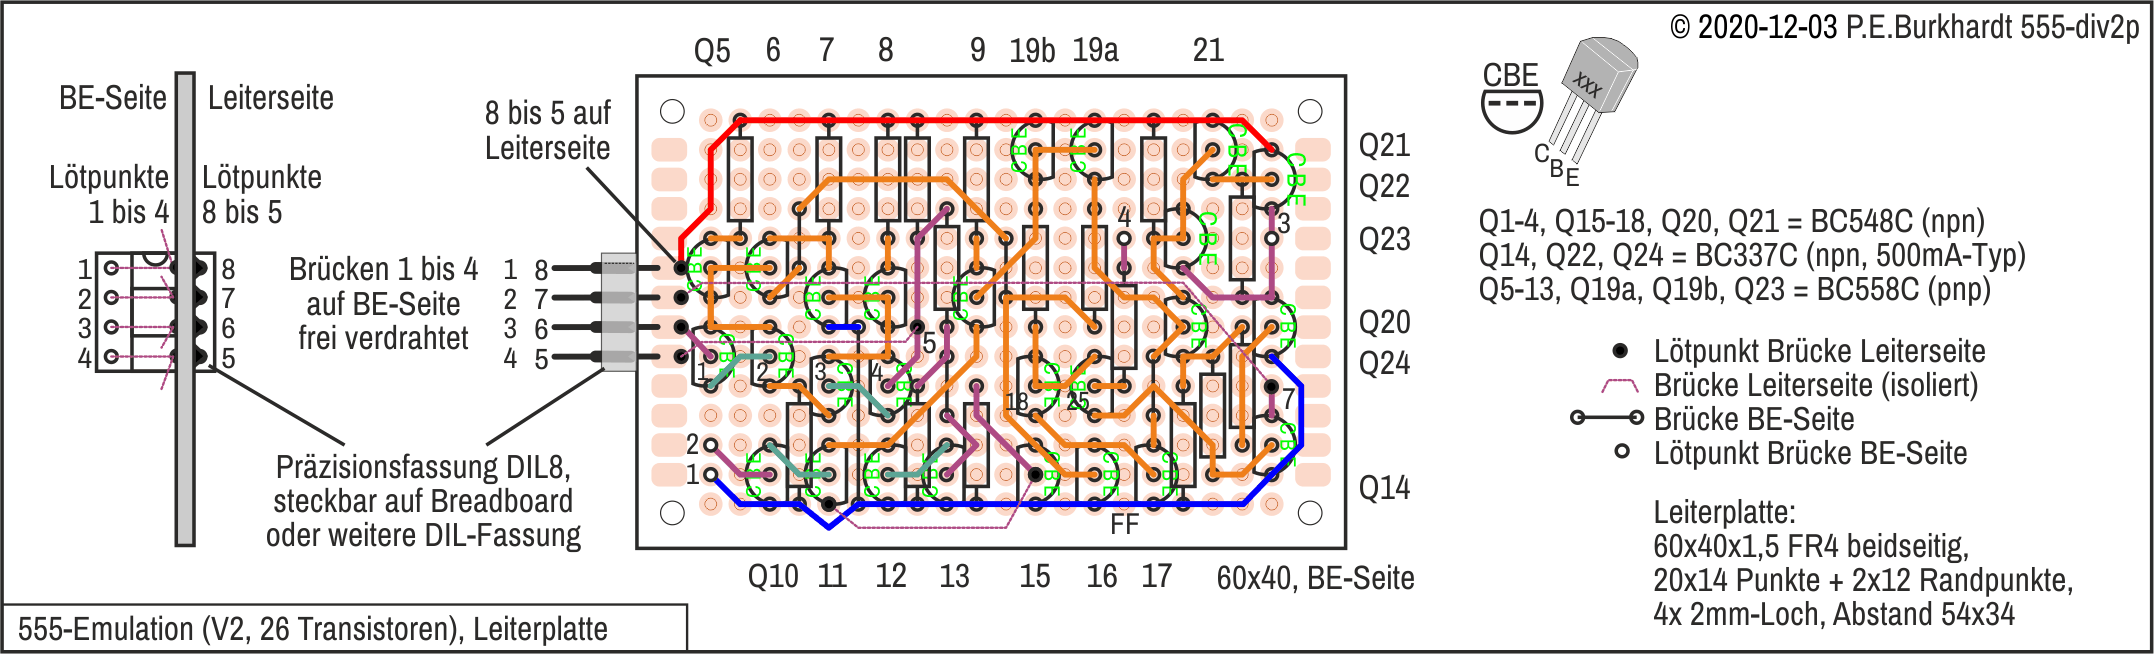 555-Emulation mit 26 Transistoren, PCB